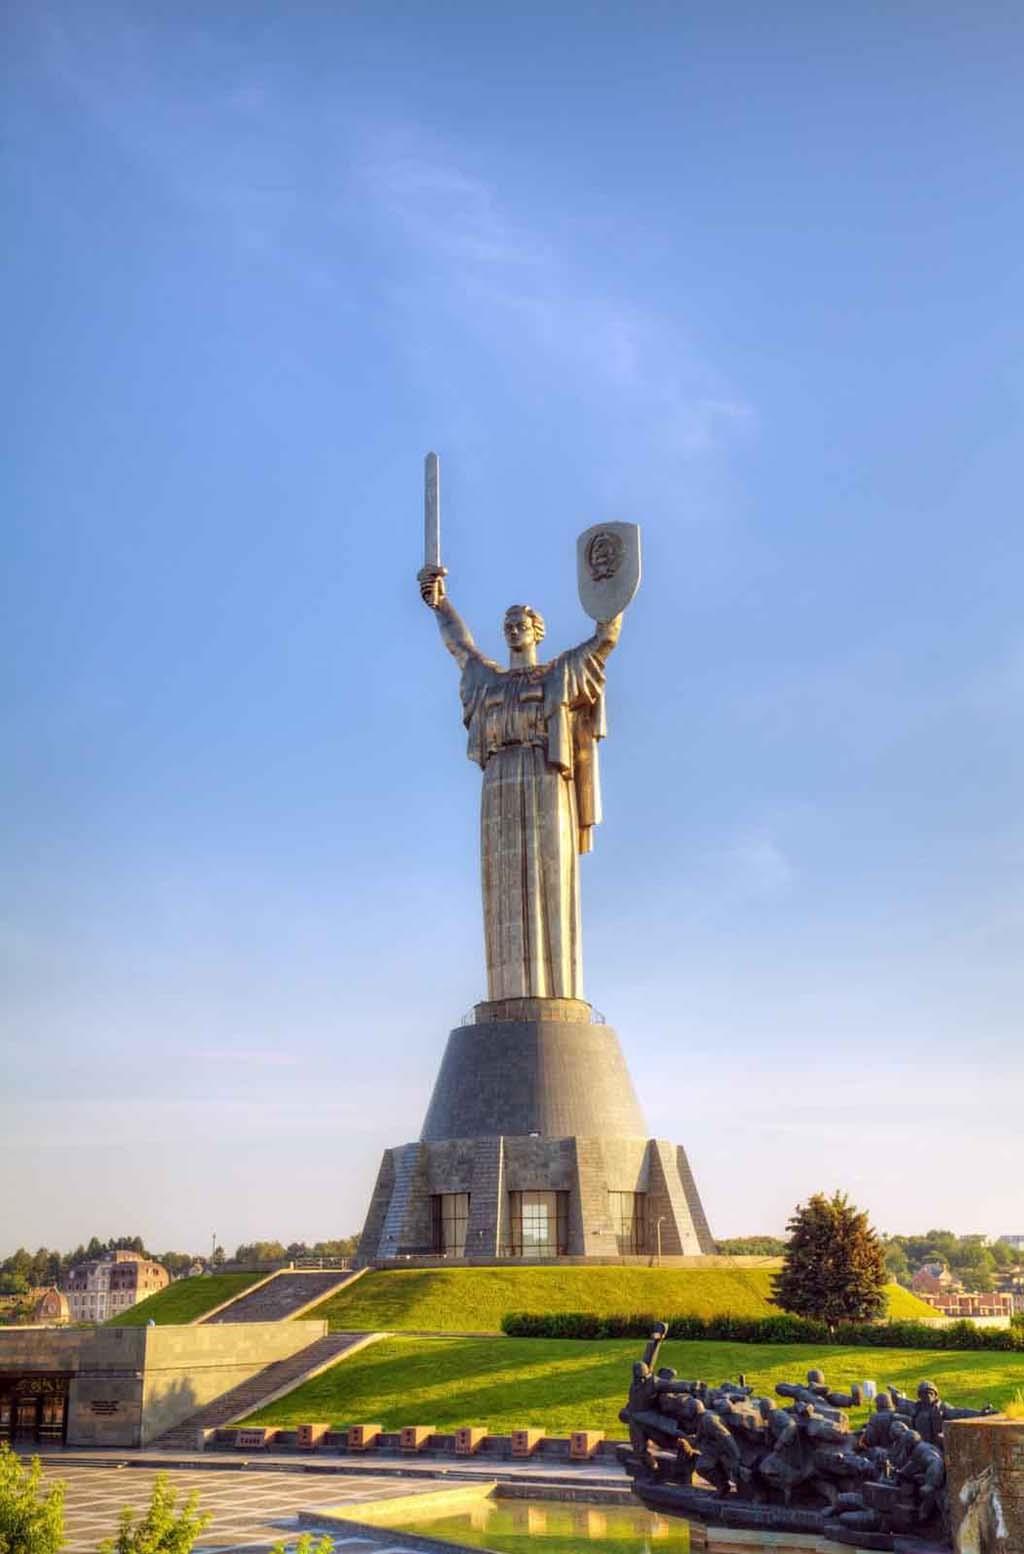 13. The Motherland Monument, Ukraine